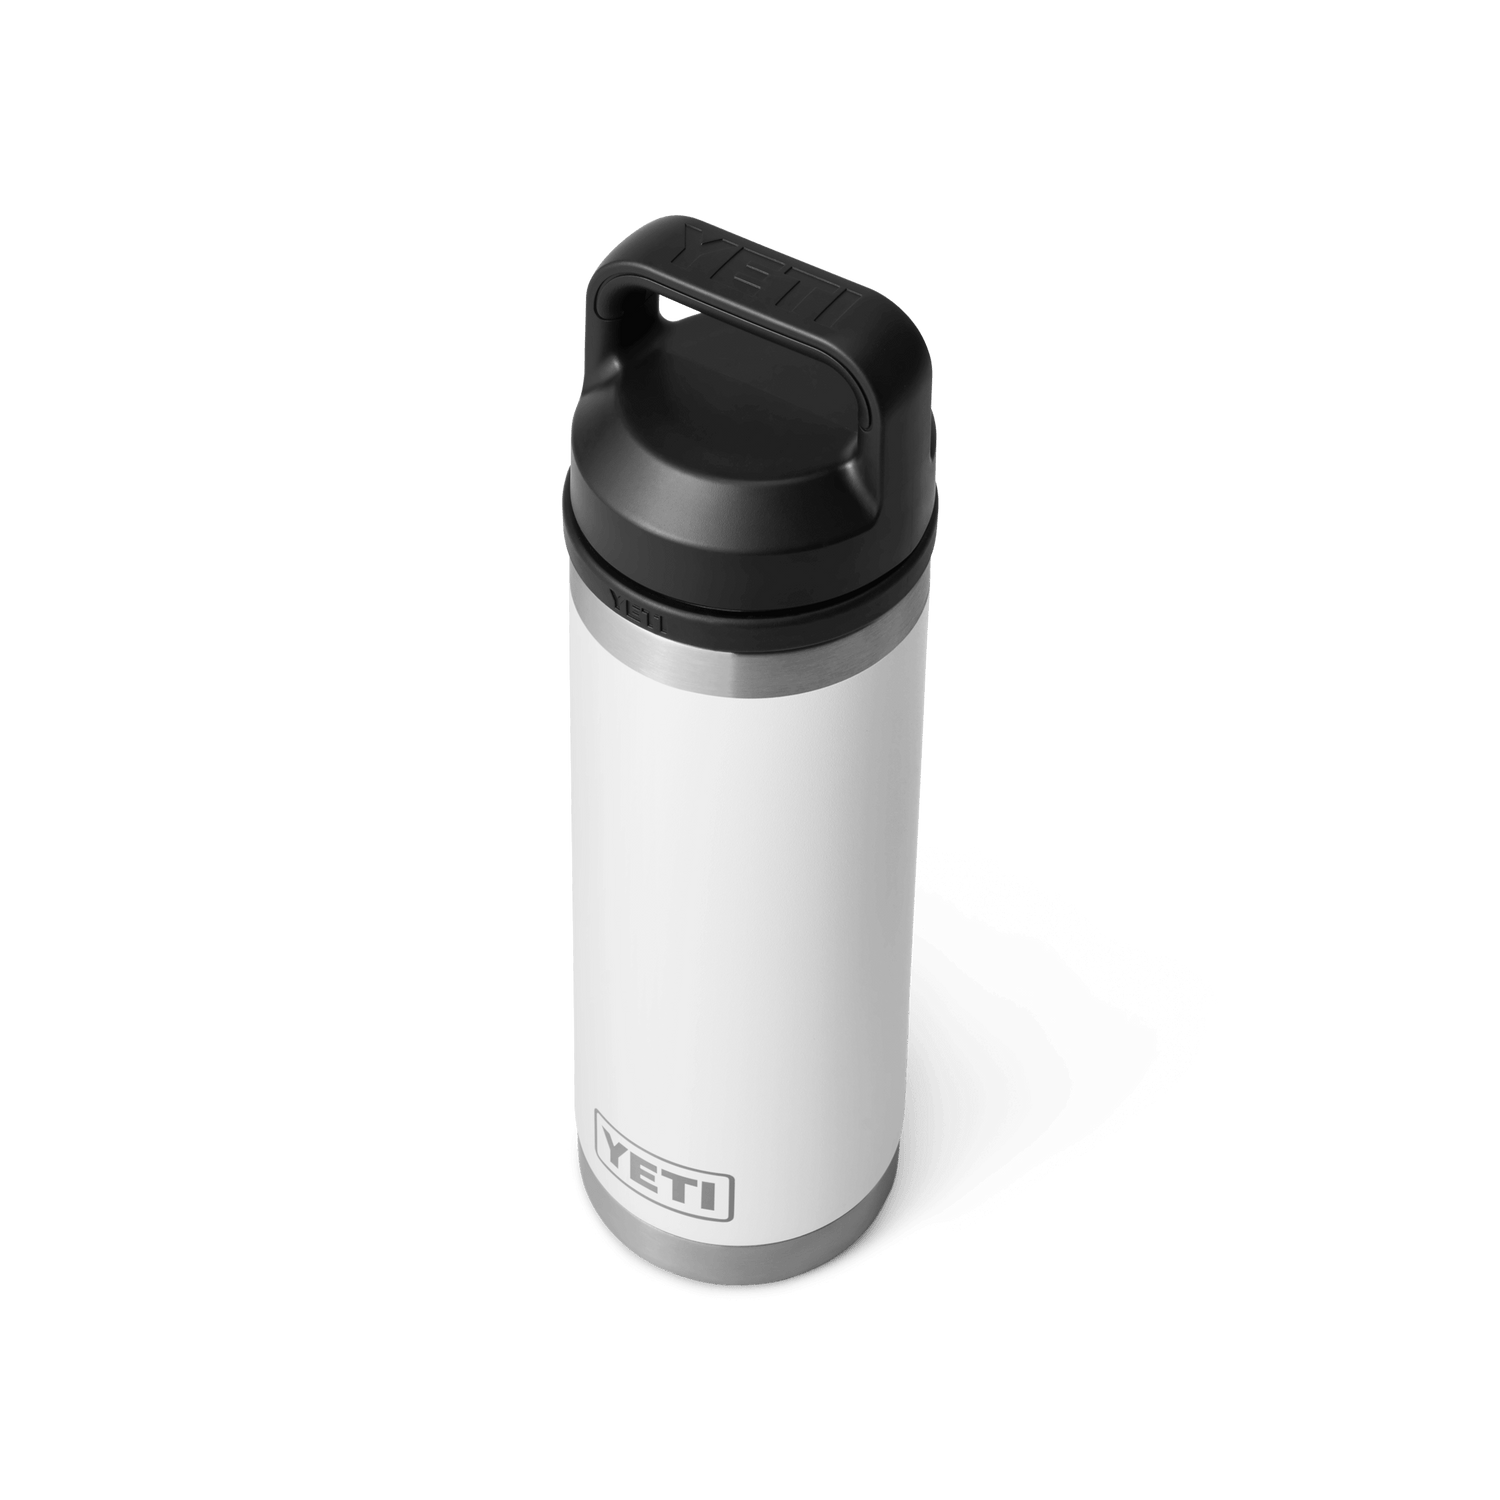 Yeti Rambler Hotshot 18 oz Water Bottle Screw Cap Insulated Stainless Steel